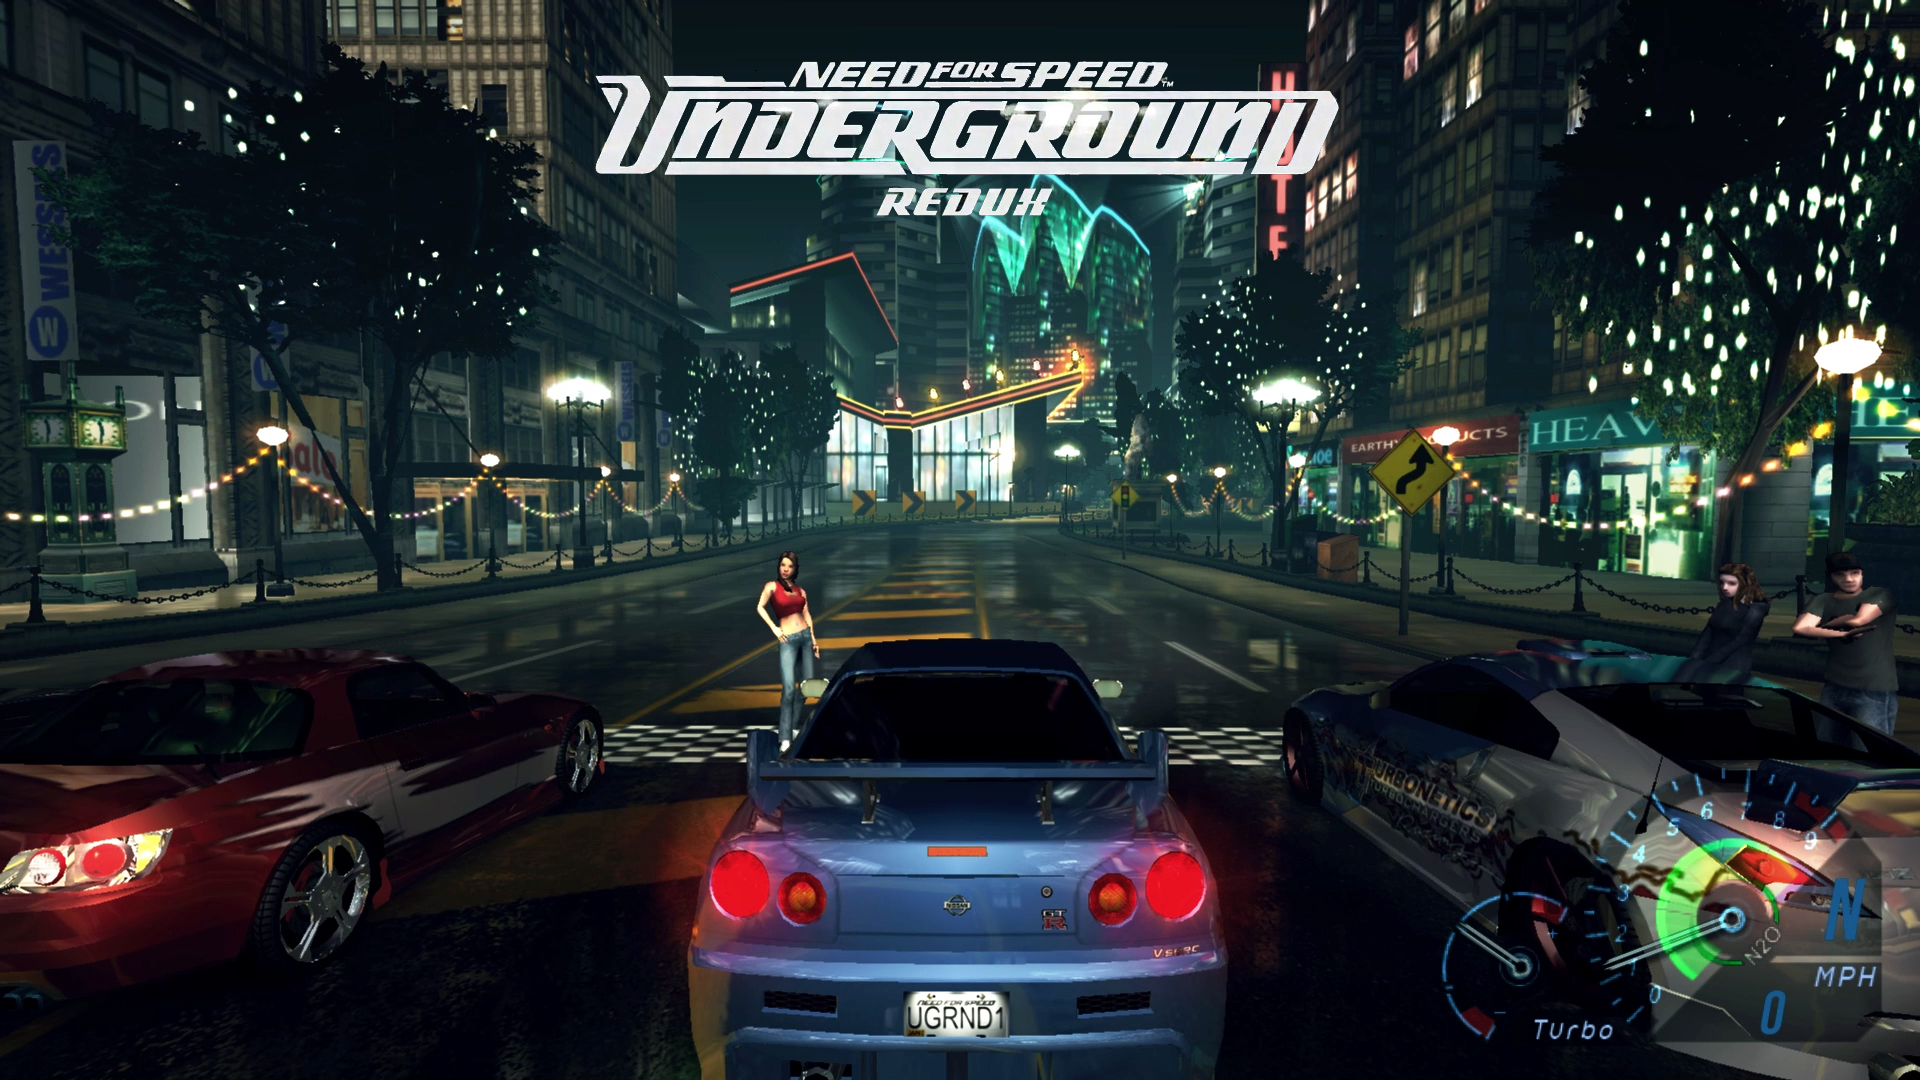 Прохождение андеграунд. Need for Speed Undercover Redux. Need for Speed Underground 2 редукс. Need for Speed андеграунд 3. Need for Speed Underground 2020.